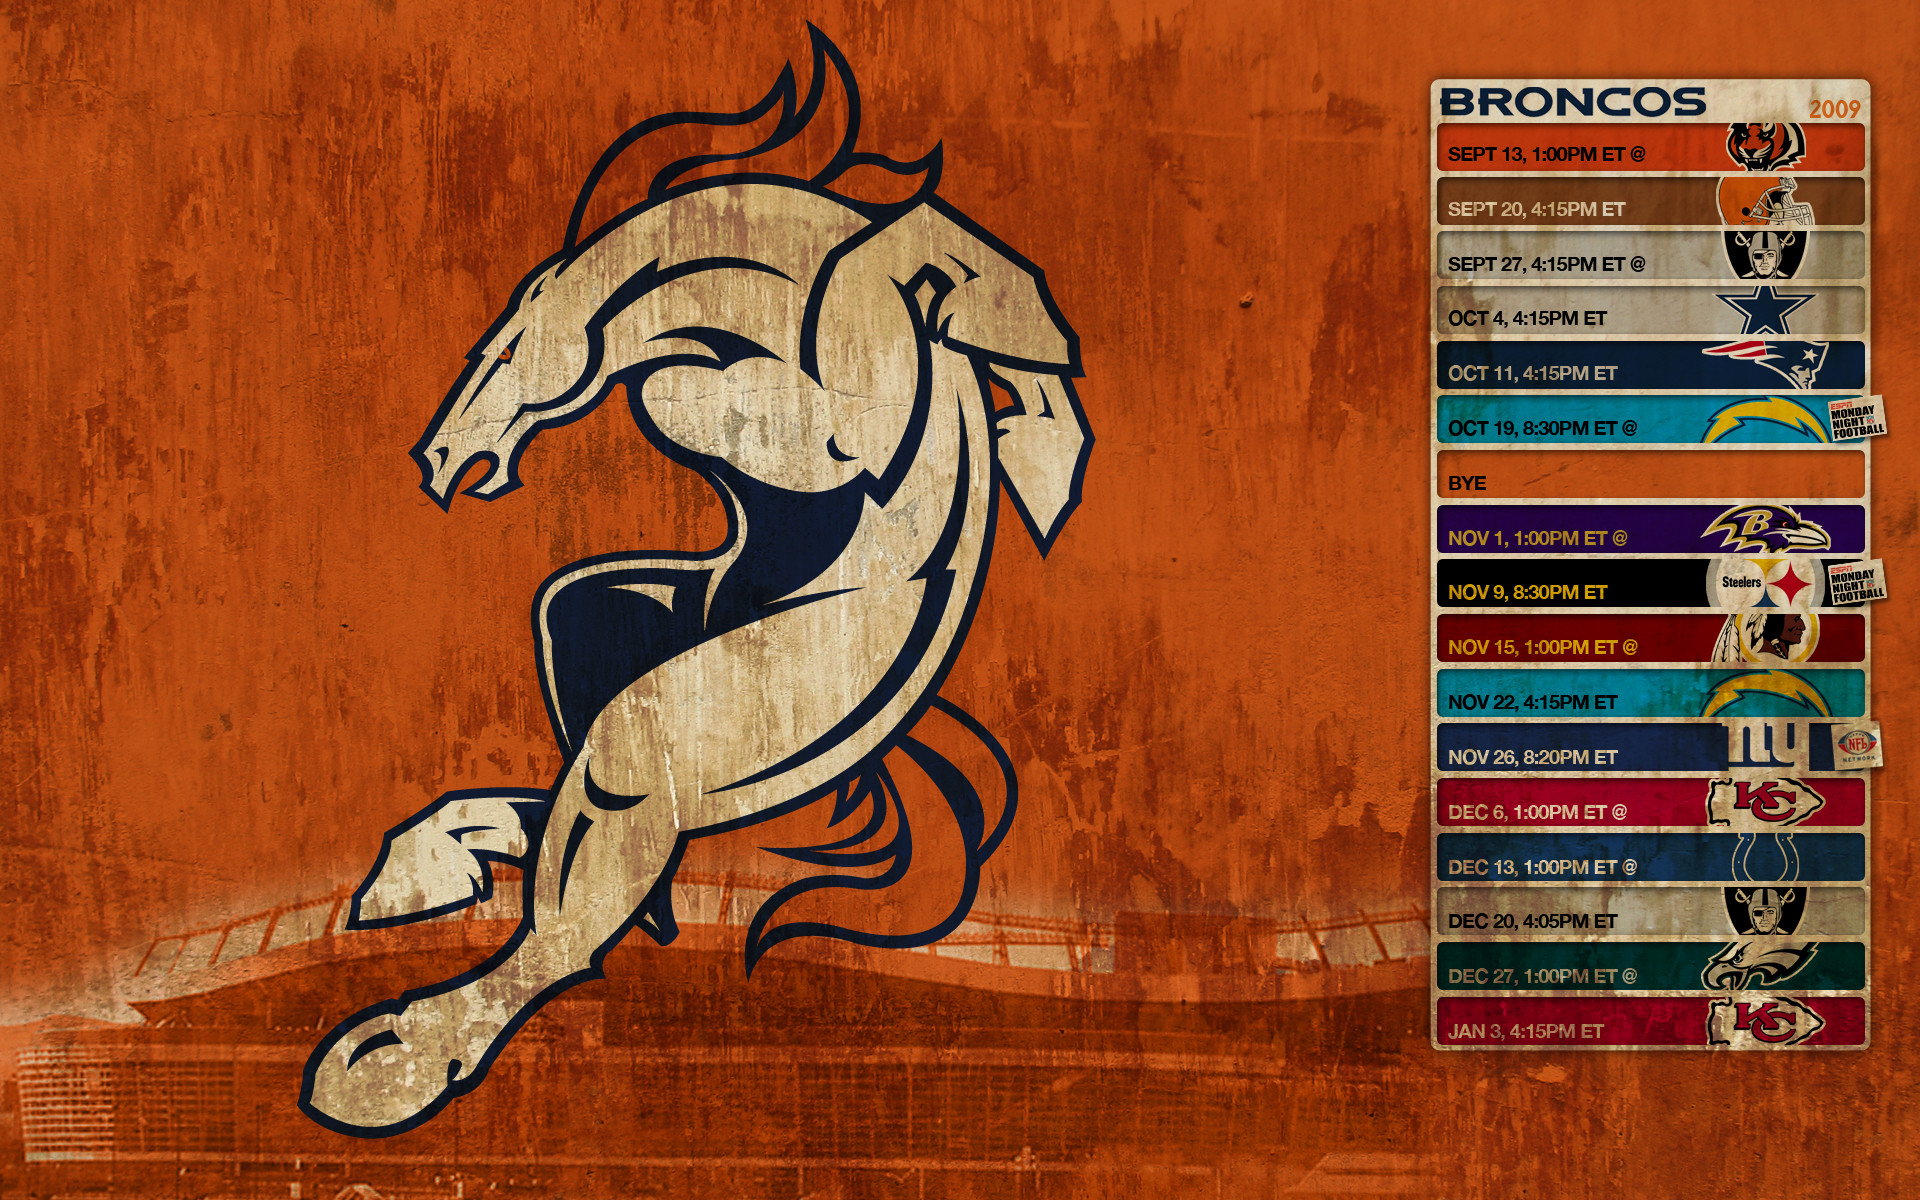 1920x1200 2009-Broncos-Alternate-Schedule-Wallpaper-by-Hawk-Eyes-